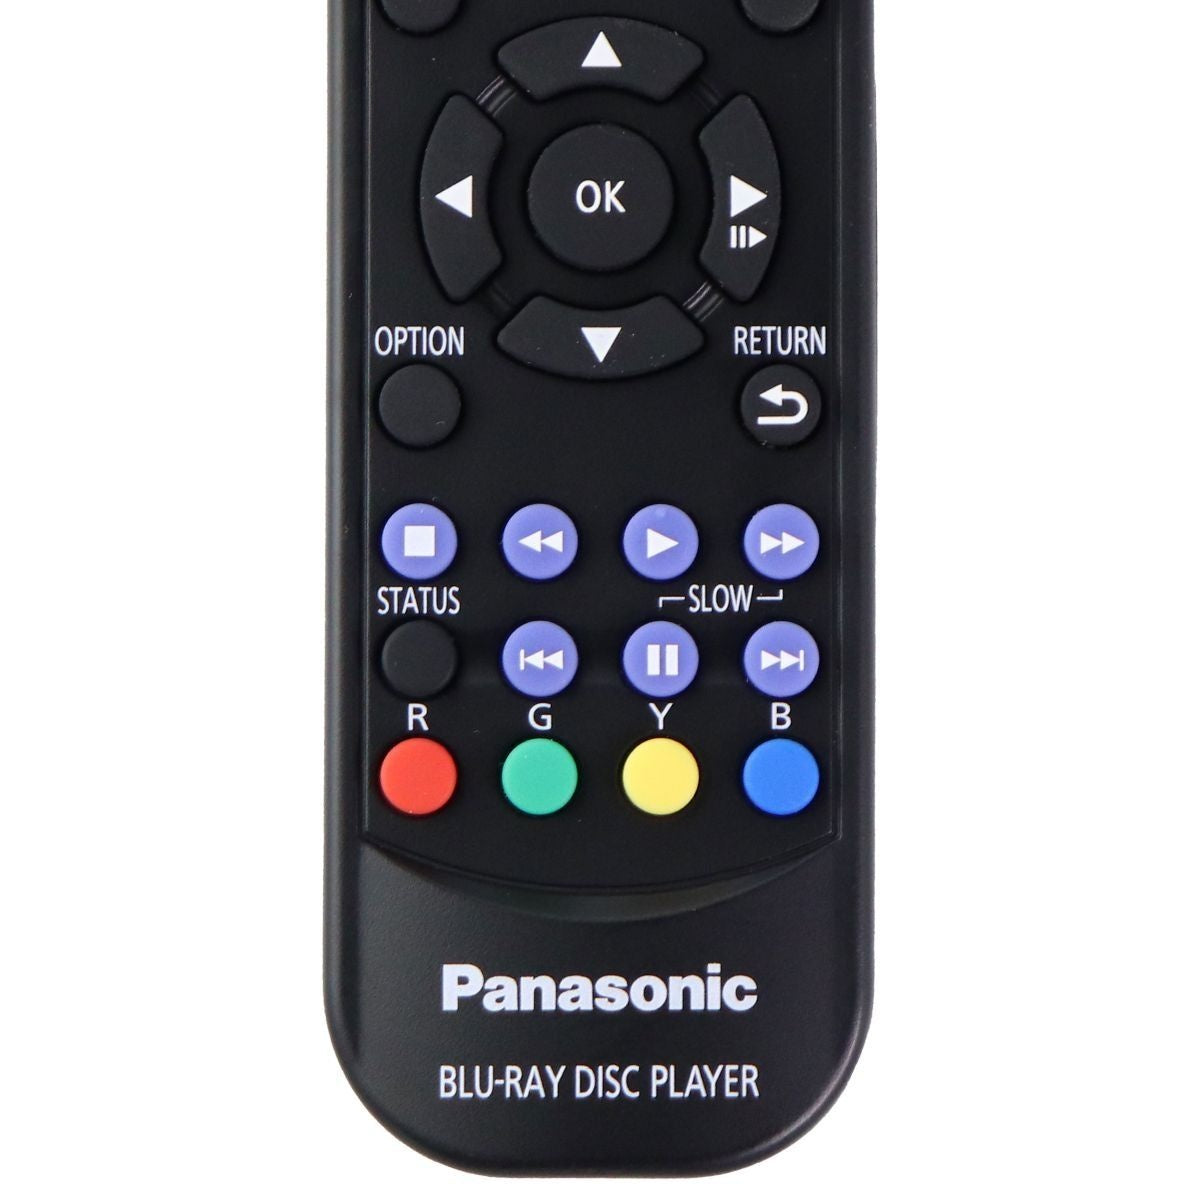 Panasonic Remote Control (N2QAYA000217) for Select Blu-Ray Disc Player - Black TV, Video & Audio Accessories - Remote Controls Panasonic    - Simple Cell Bulk Wholesale Pricing - USA Seller